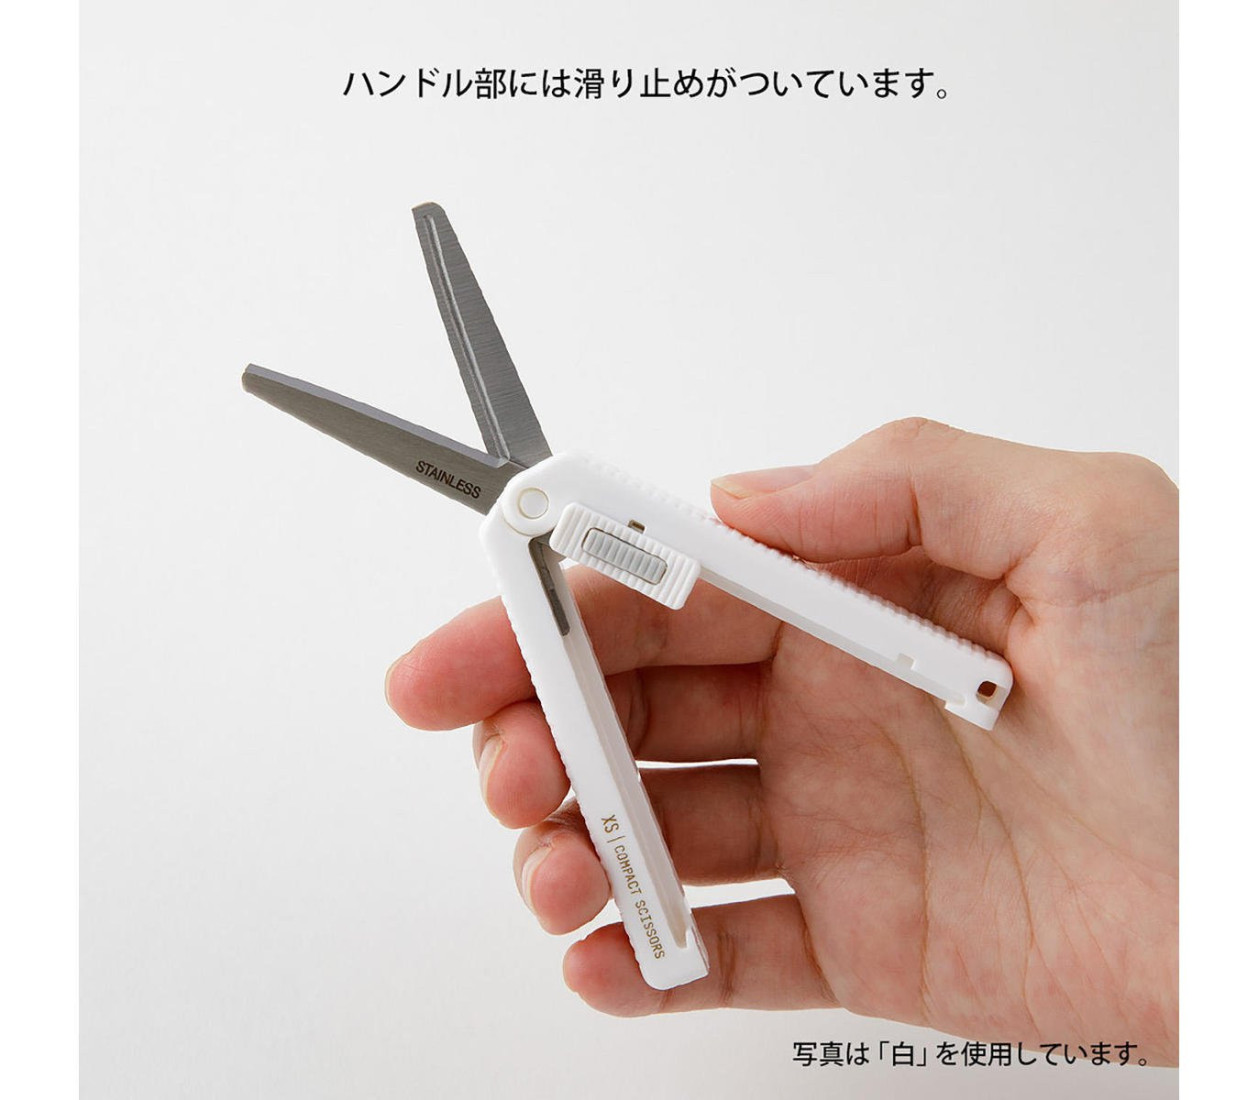 Midori XS (extra small) Compact Scissors Black 35535006